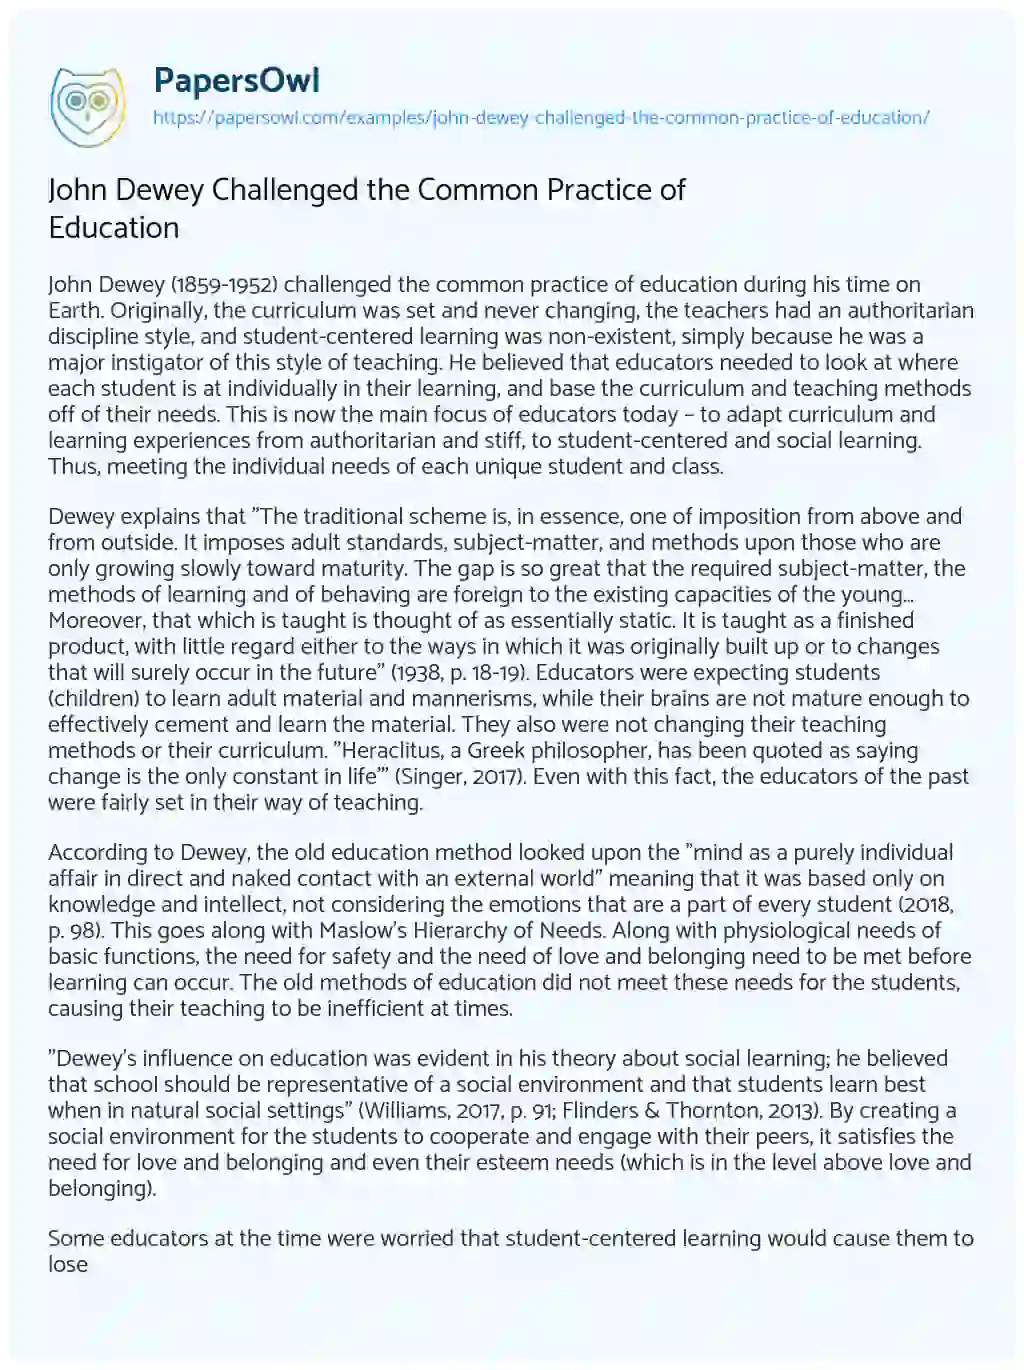 Essay on John Dewey Challenged the Common Practice of Education